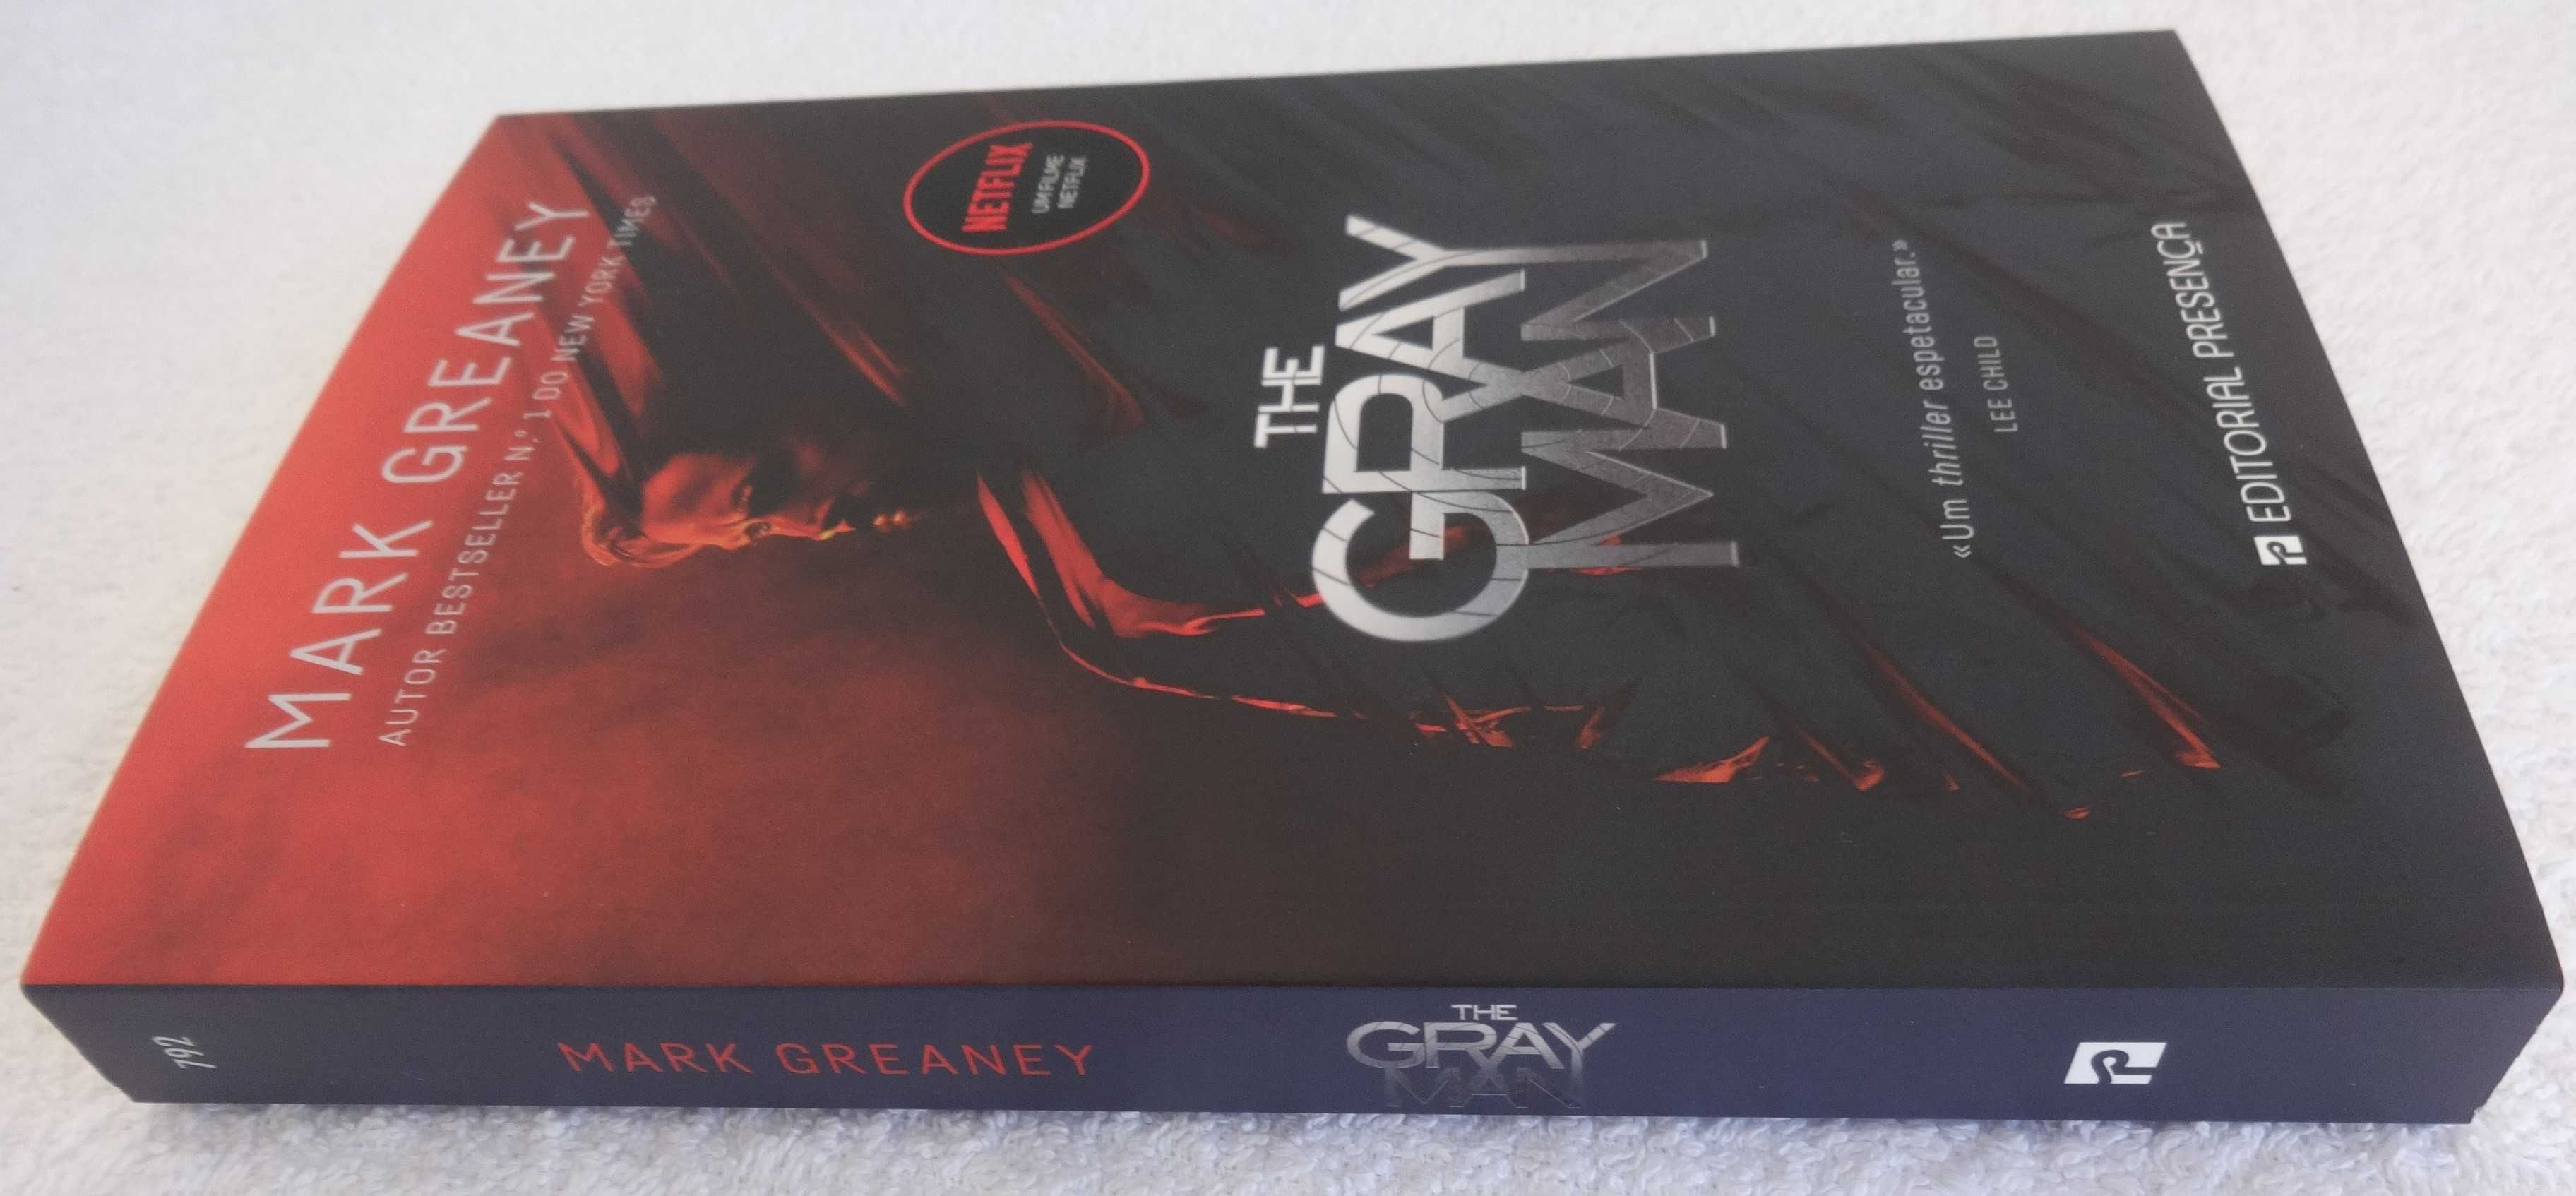 Livro “The Gray Man - Agente Oculto”